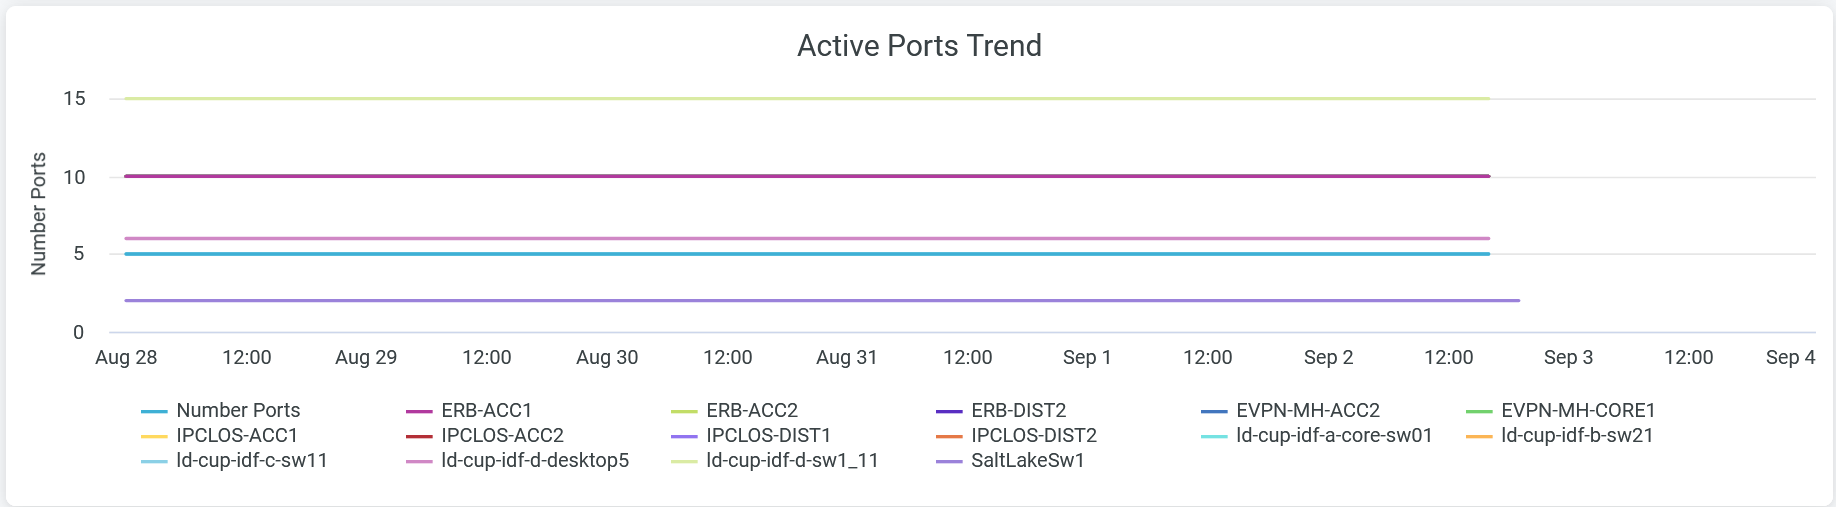 Active Ports Trend